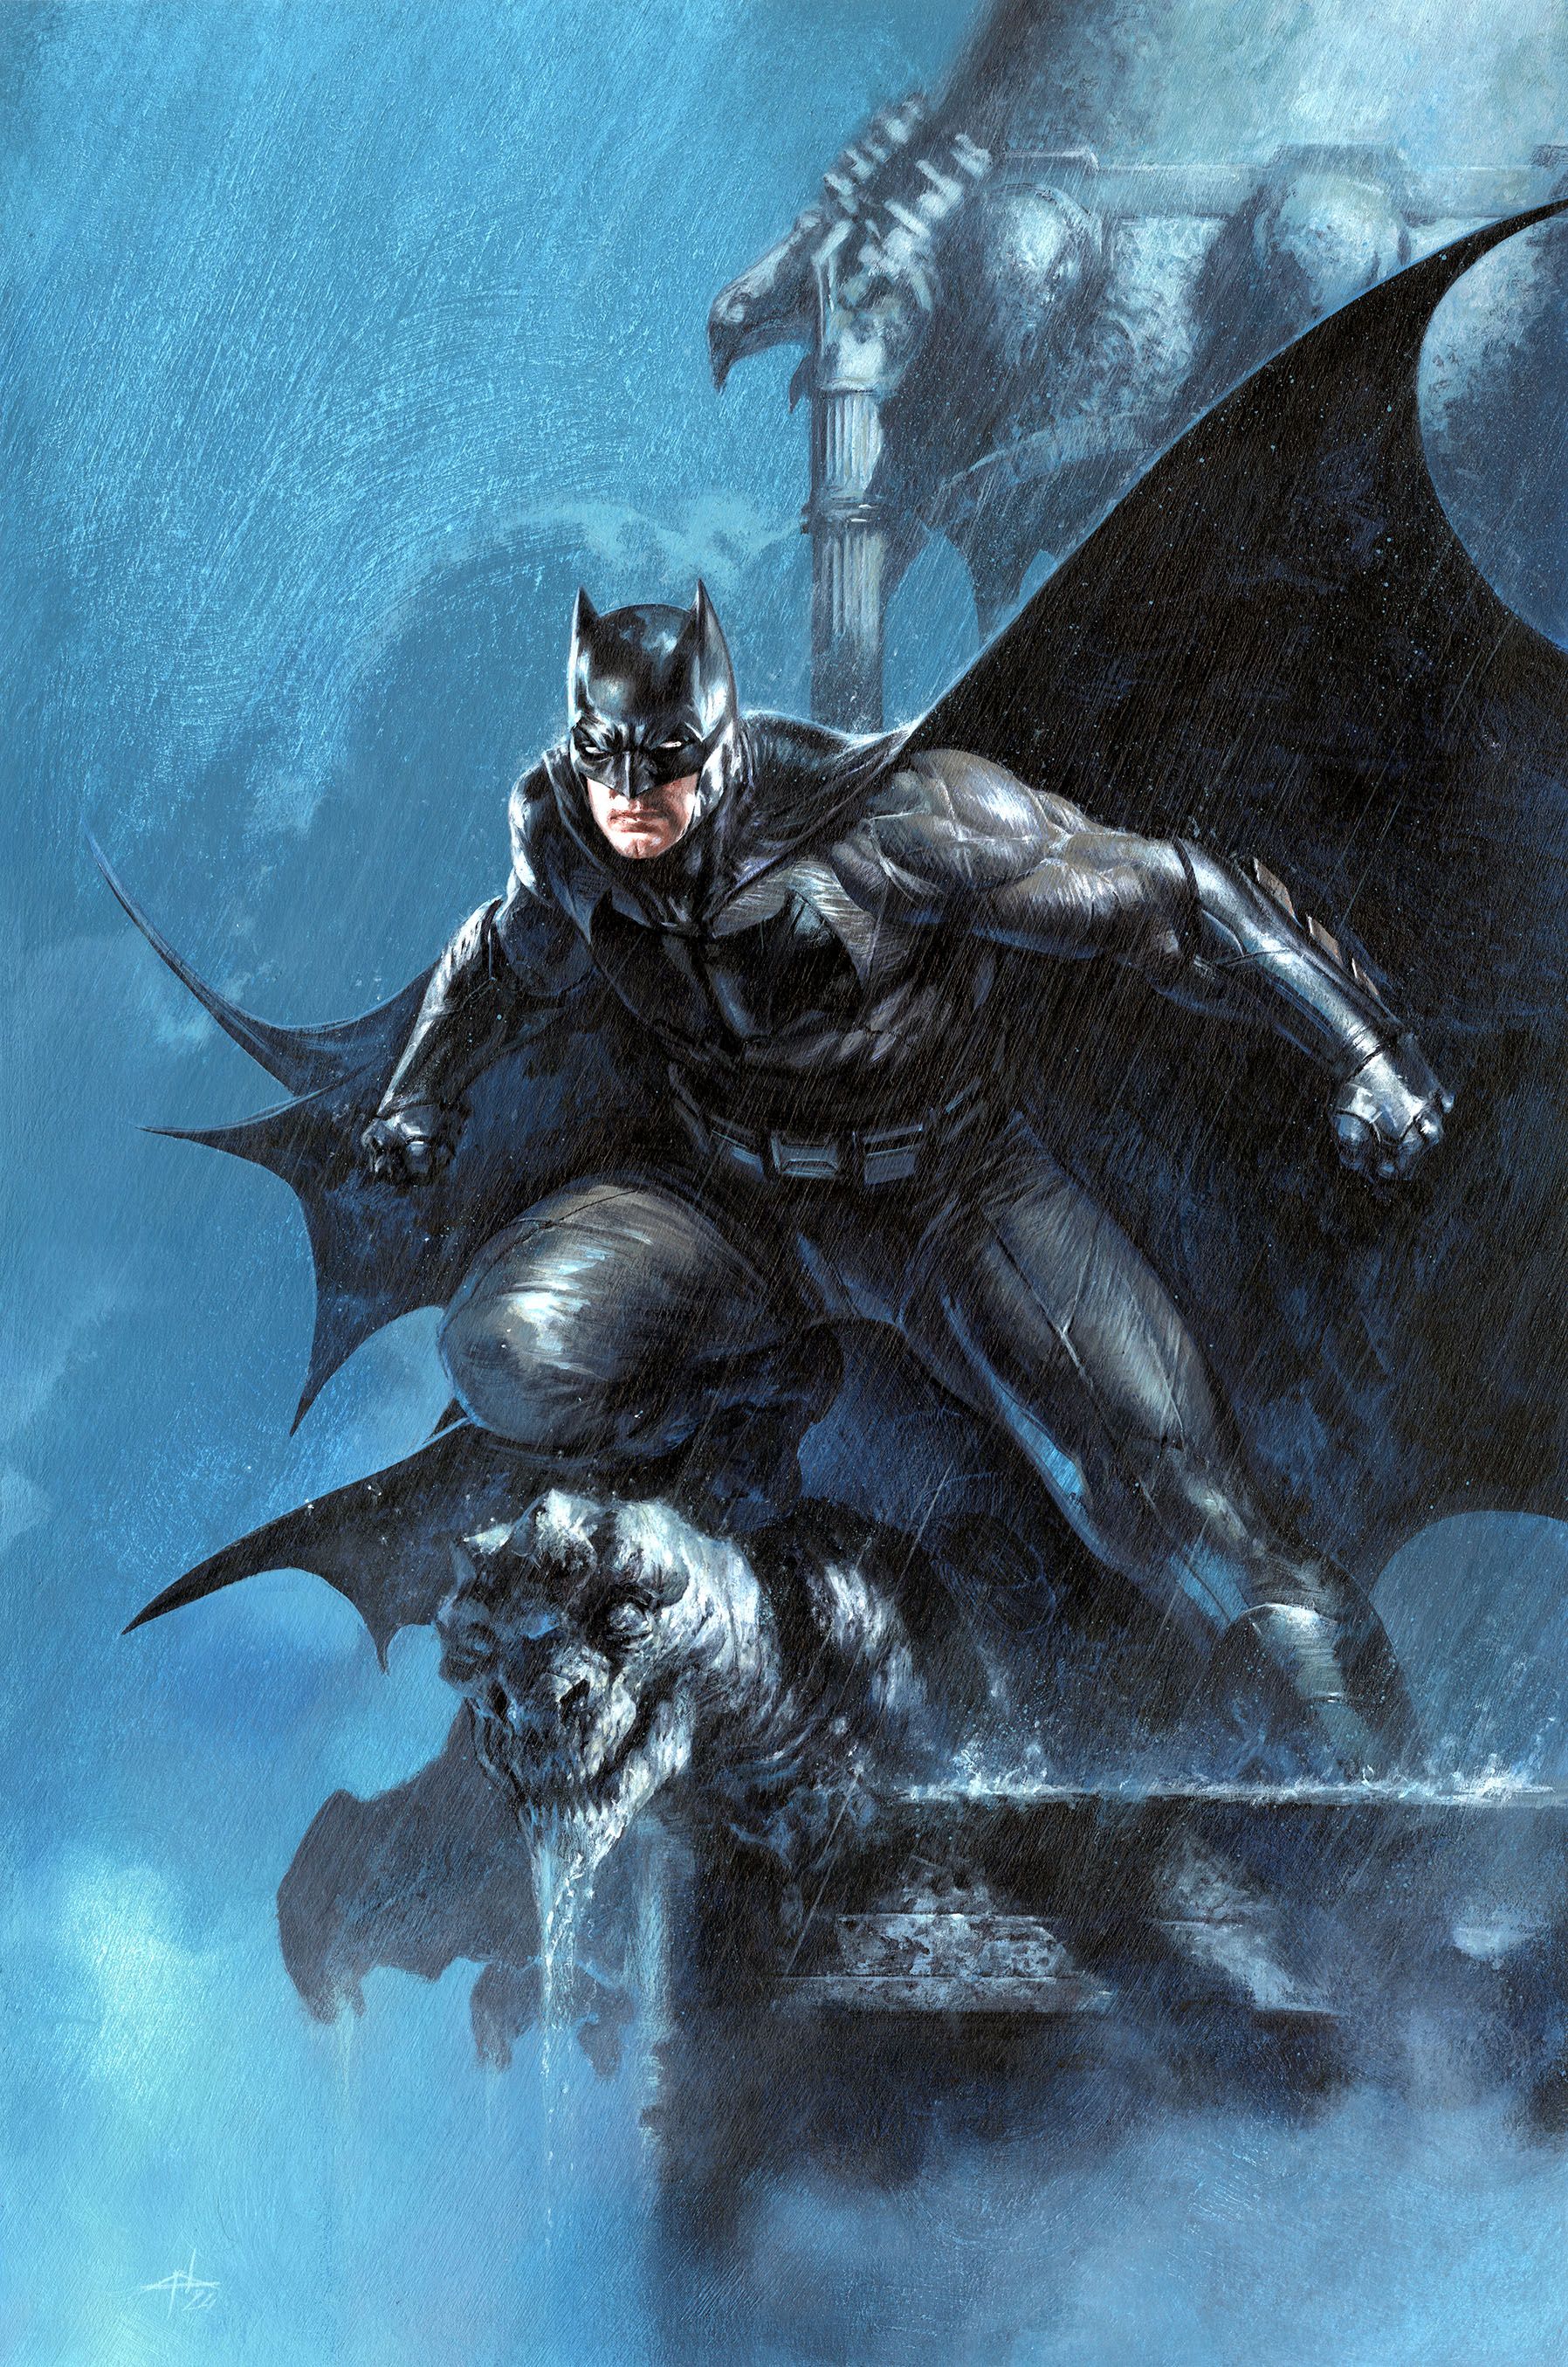 Batman 151 DellOtto Variant Cover: Ben Affleck's Batman standing on a gargoyle in the rain.